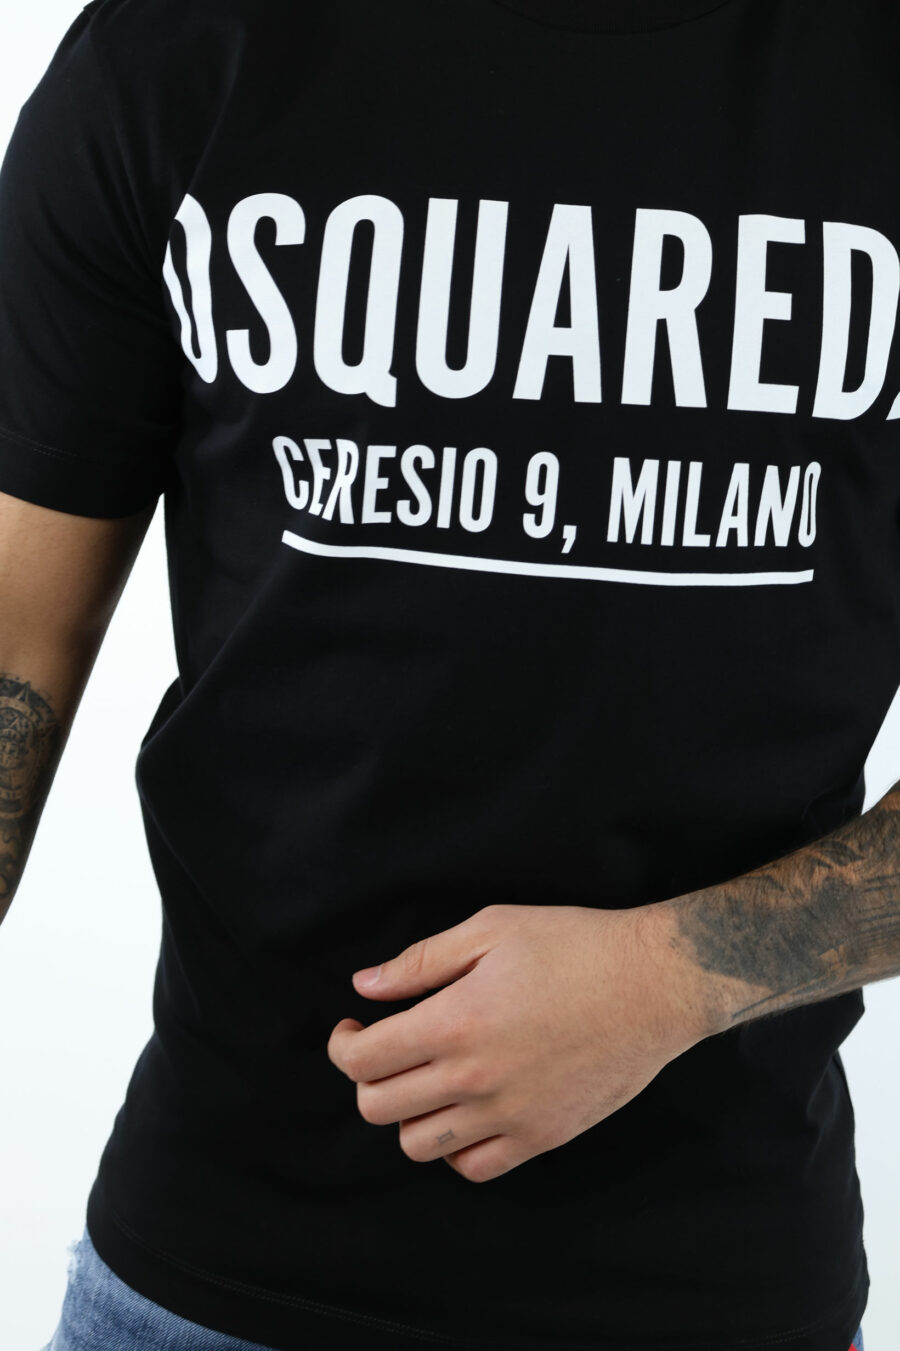 T-shirt preta com maxilogo "ceresio 9 milano" - 106863